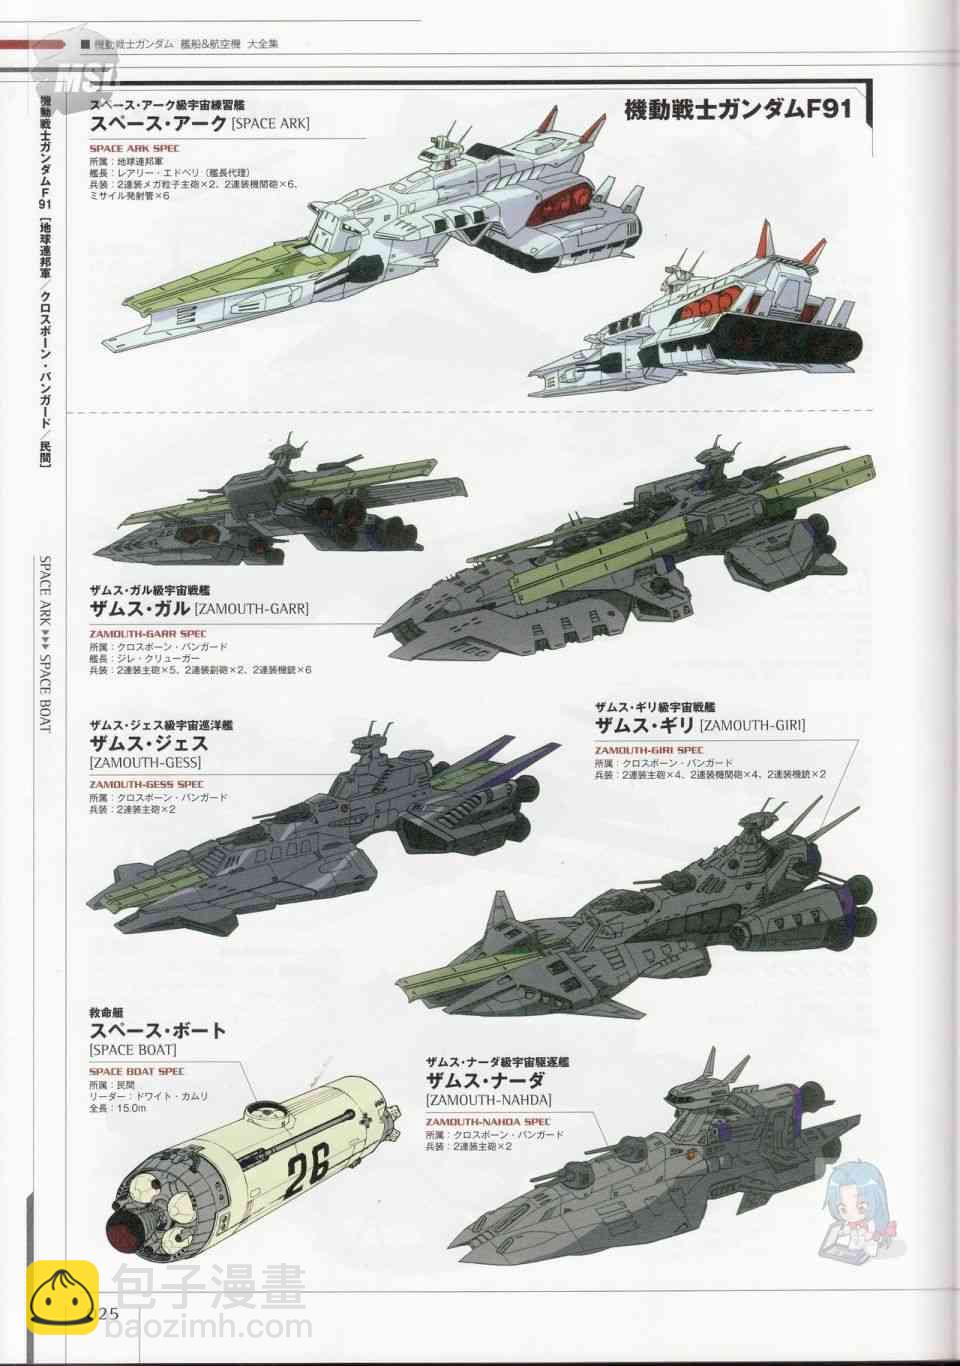 Mobile Suit Gundam - Ship amp; Aerospace Plane Encyclopedia - 1話(1/4) - 5